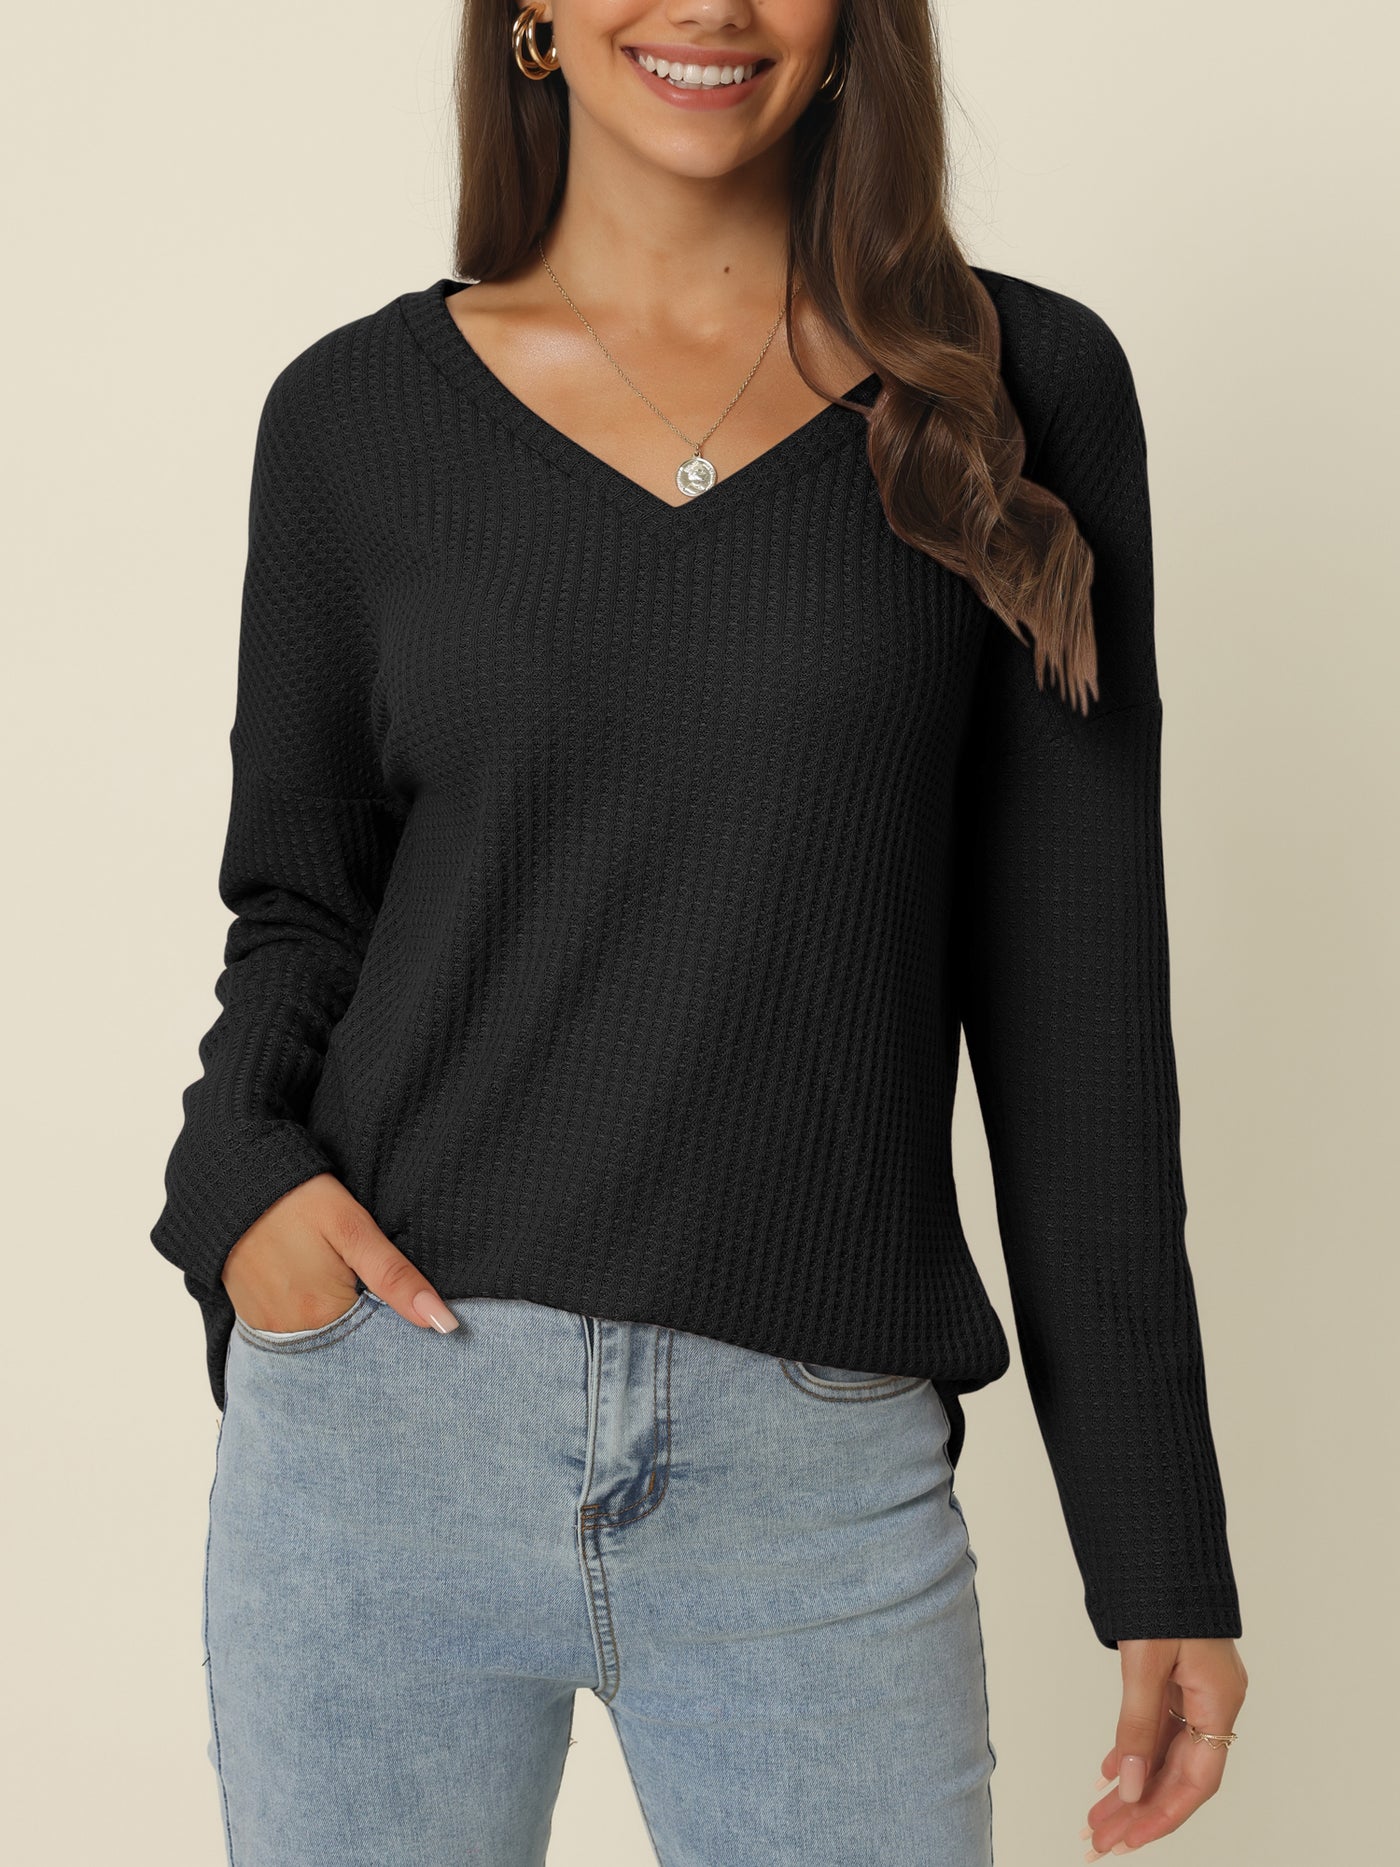 Bublédon Women's V Neck Waffle Knit Long Sleeve Slim Fit Casual Tops Shirts